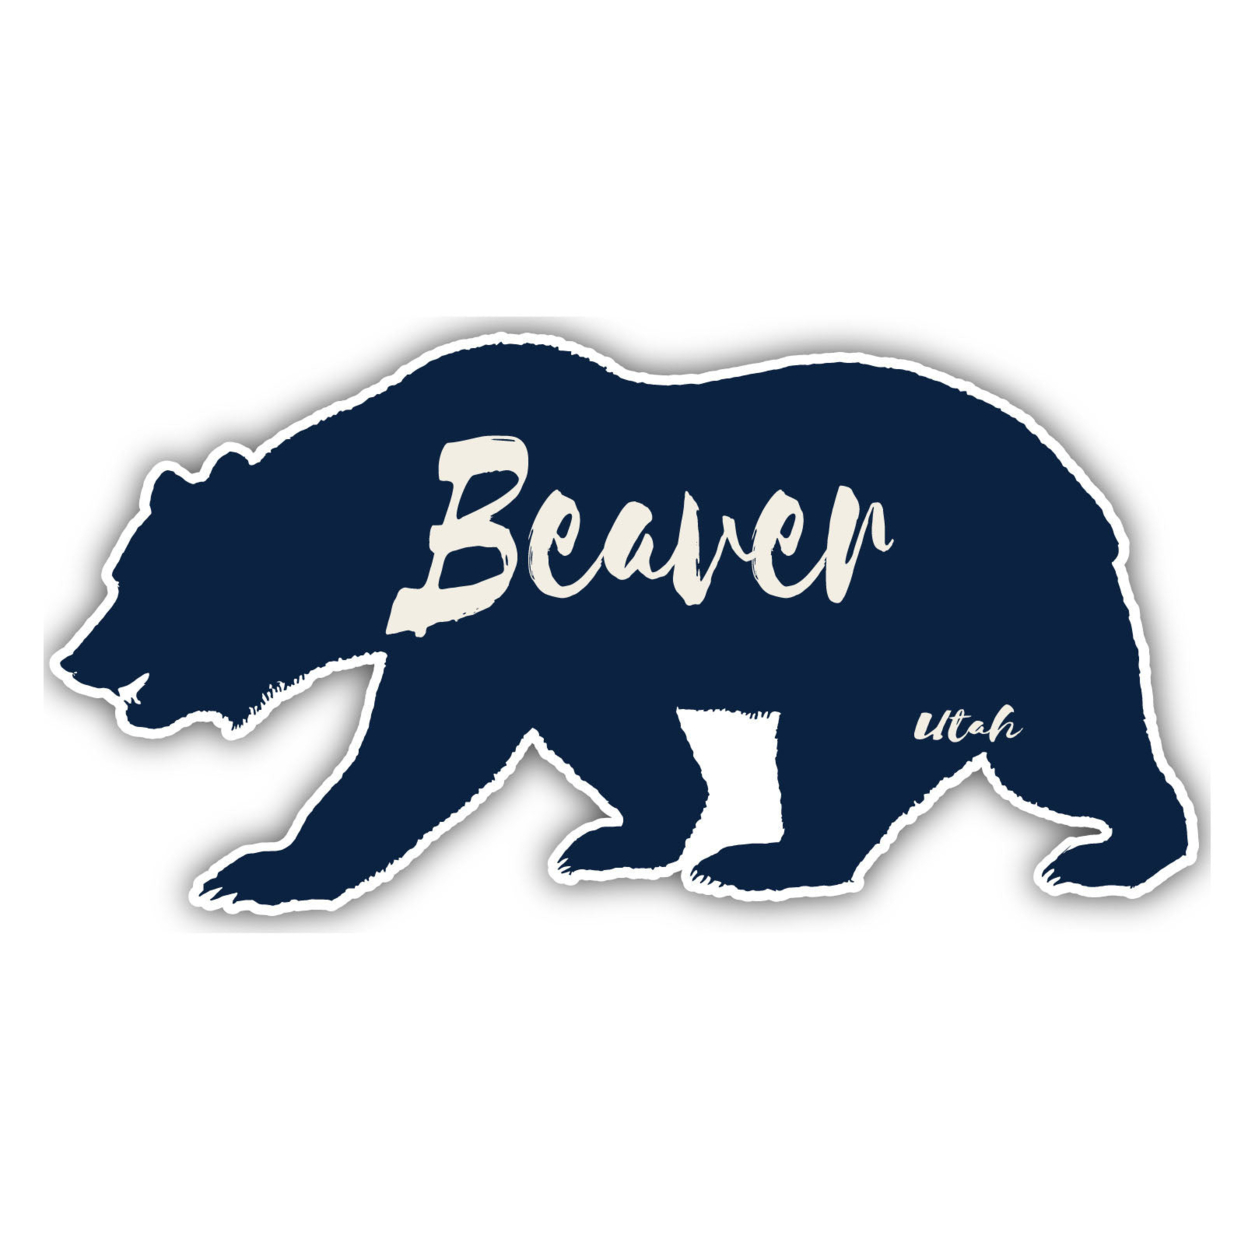 Beaver Utah Souvenir Decorative Stickers (Choose Theme And Size) - 4-Pack, 6-Inch, Bear